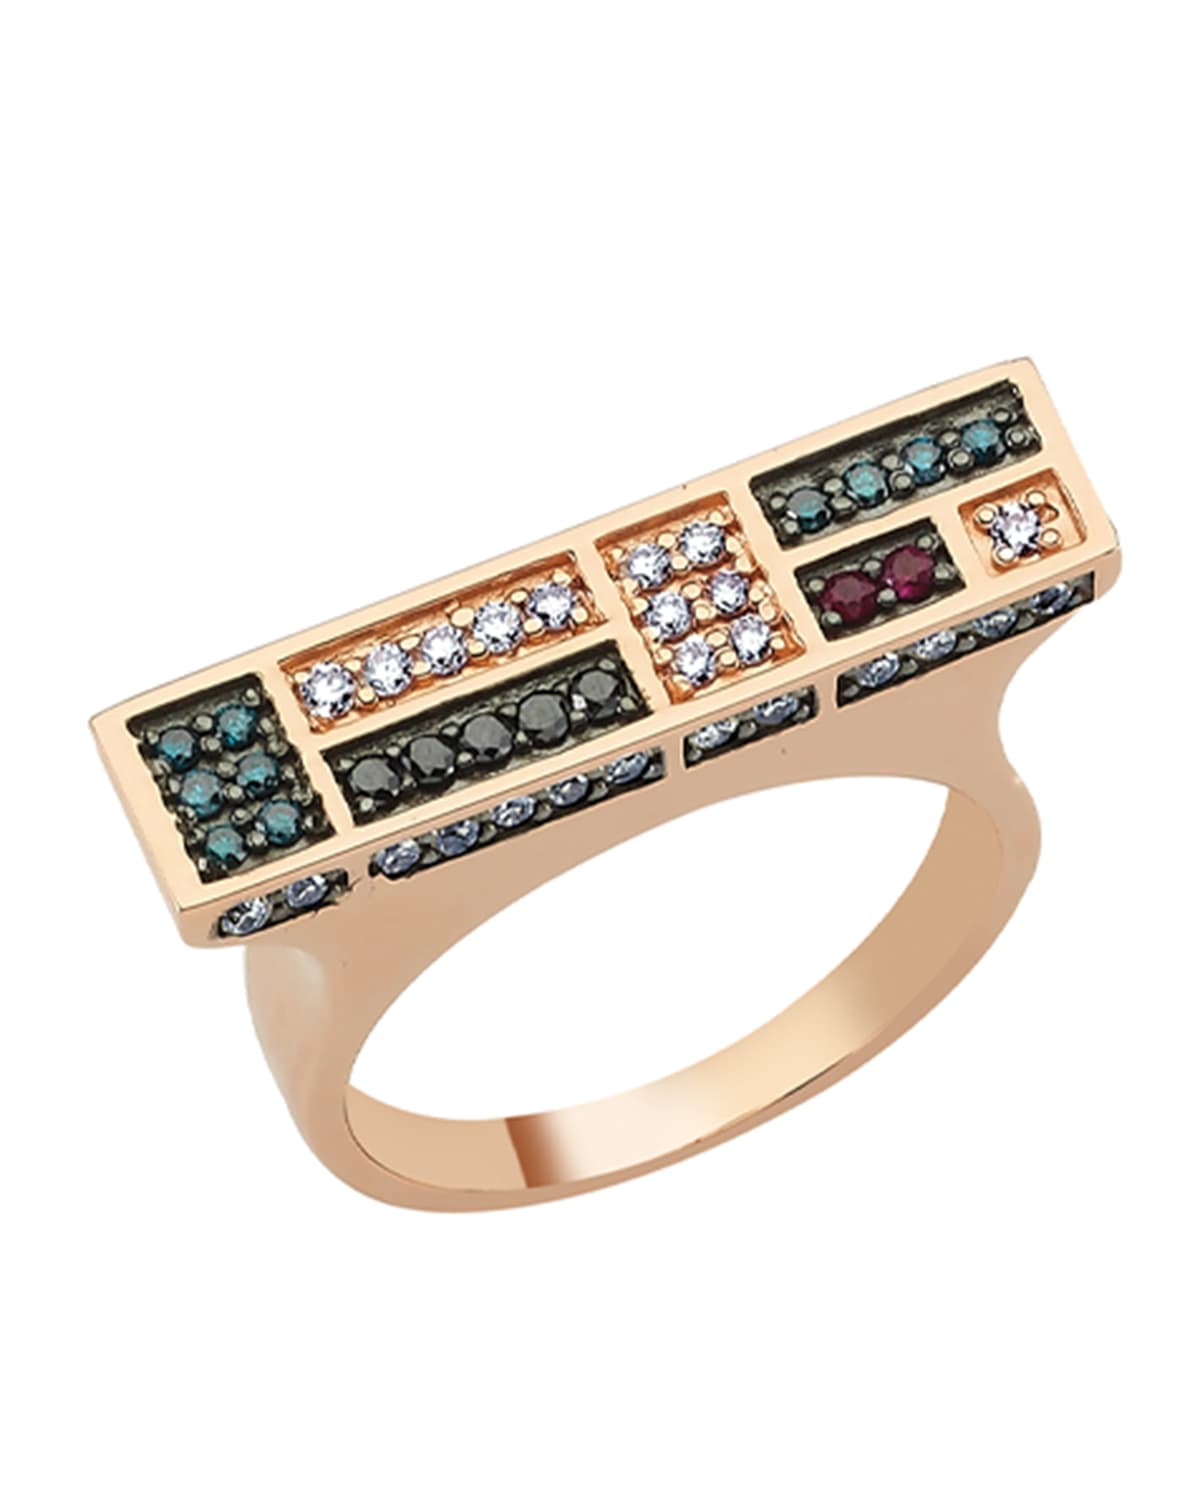 BeeGoddess Mondrian Multi-Diamond and Ruby Bar Ring, Size 7